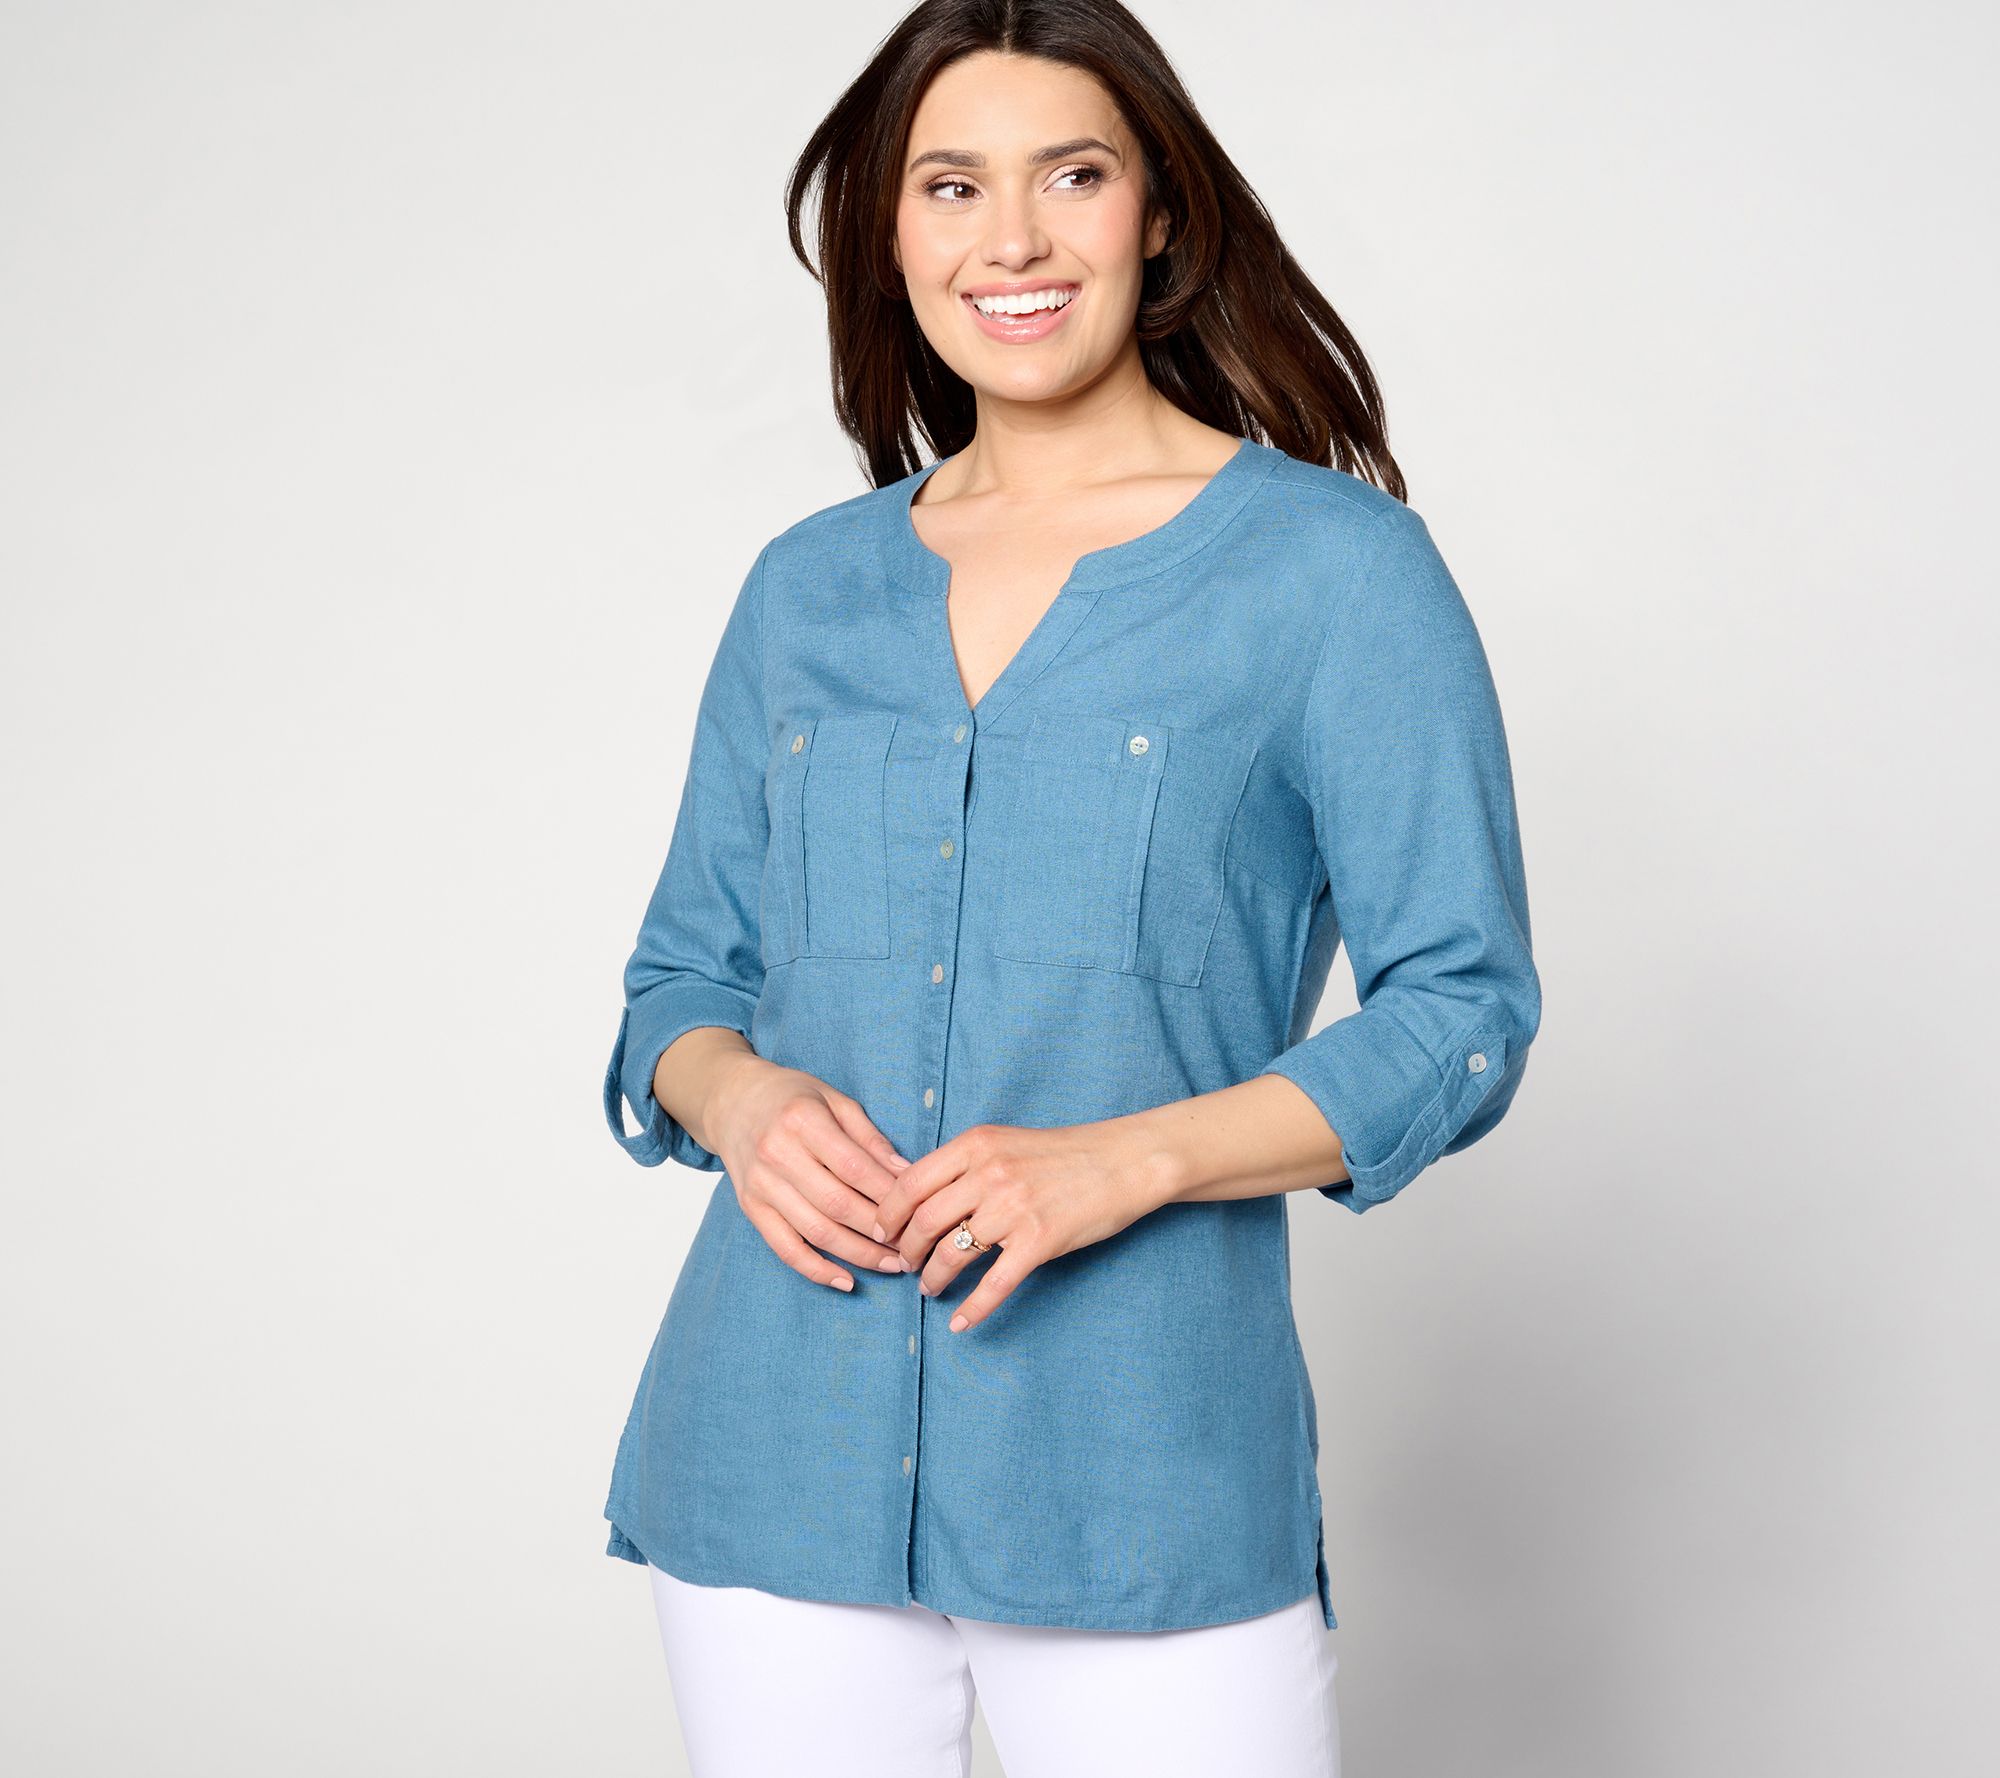 Denim u0026 Co. Naturals Linen Blend Utility Pocket Button Front Shirt - QVC.com